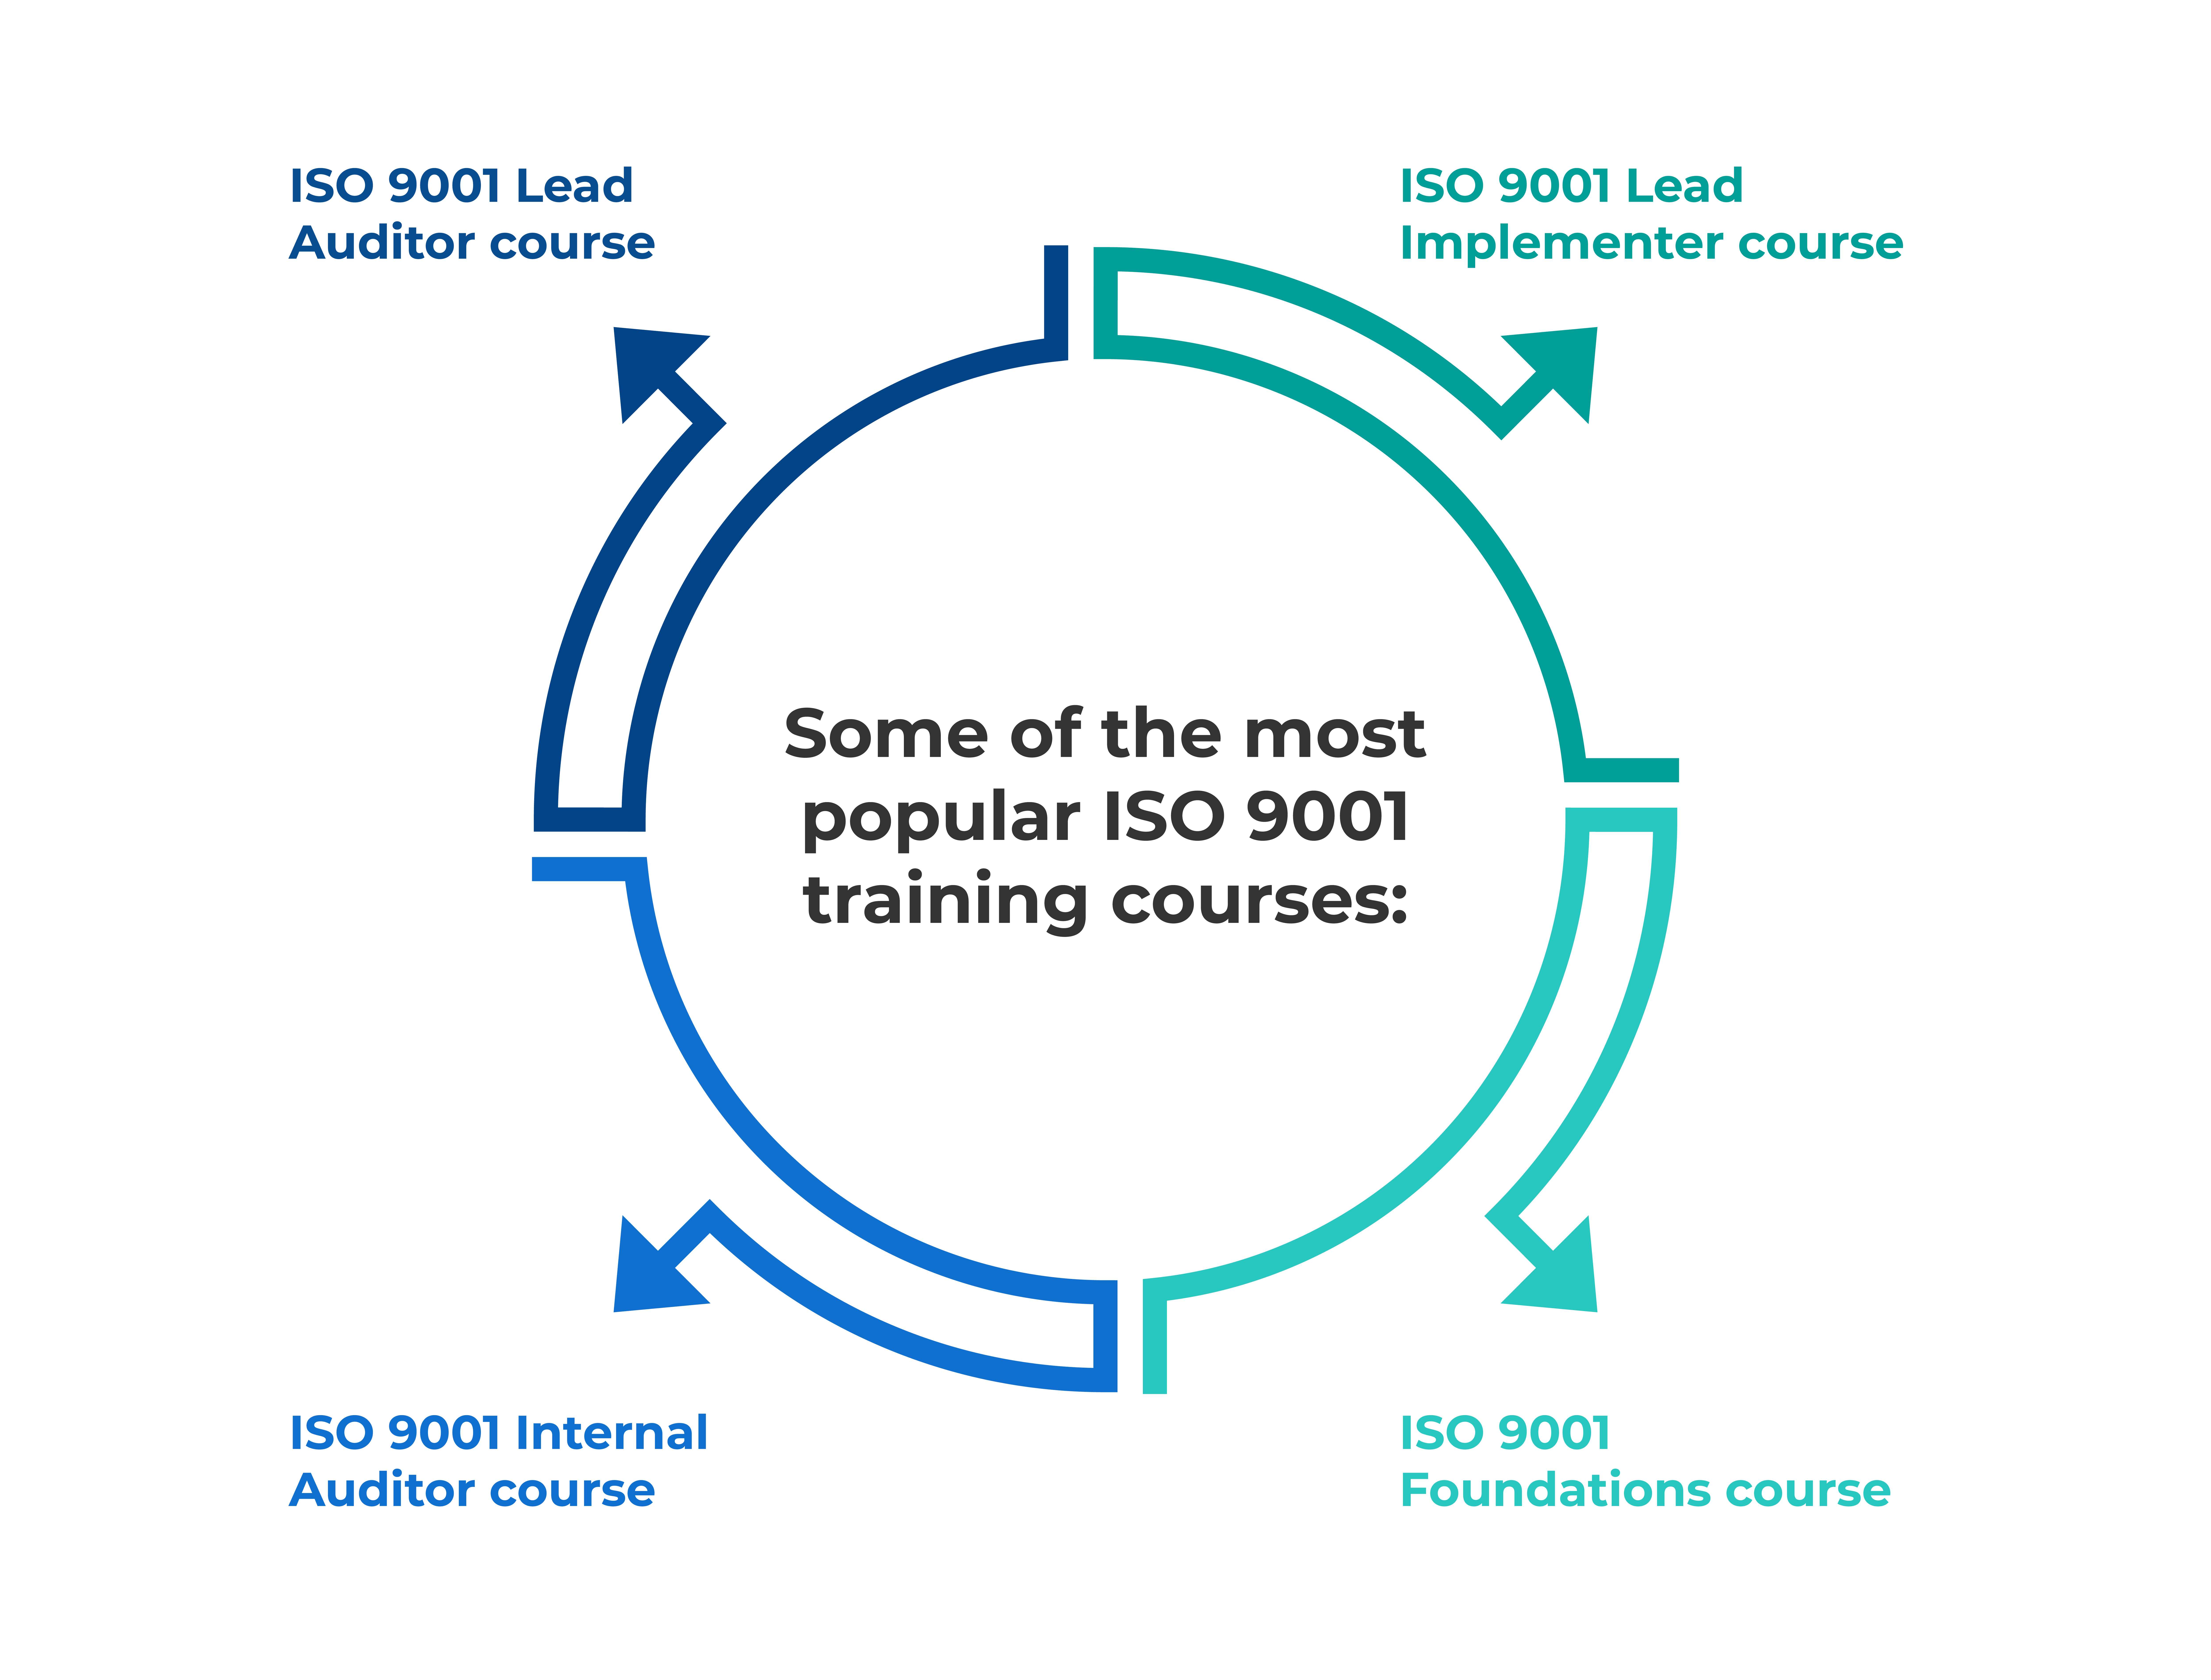 Popular ISO 9001 training courses